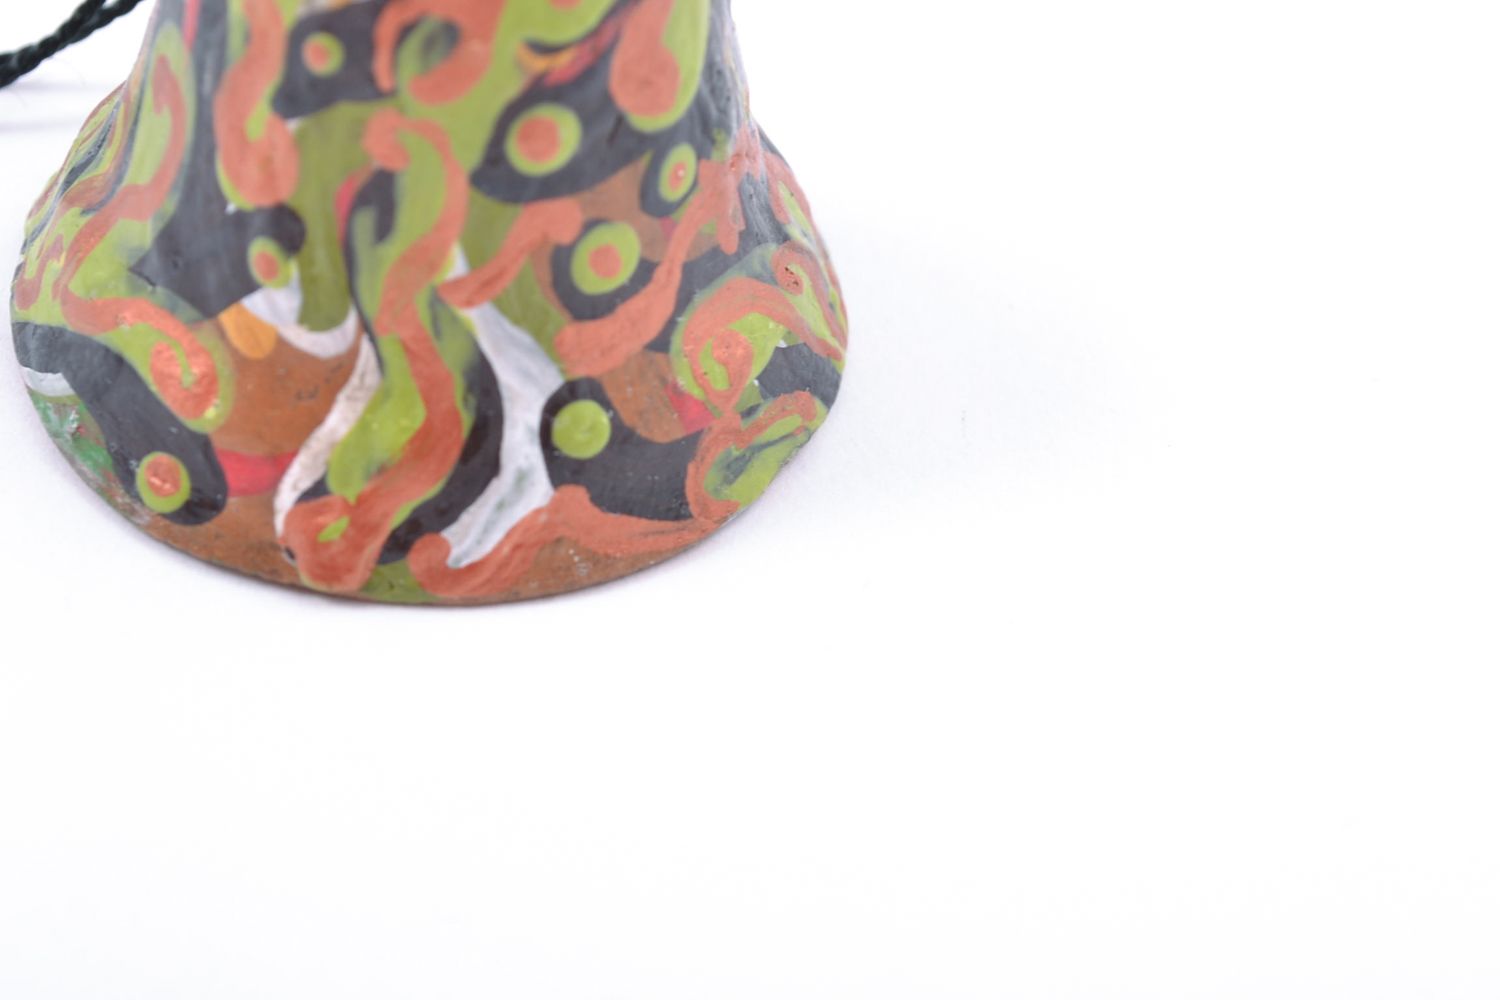 Petite cloche terre cuite multicolore peinte de colorants acryliques faite main photo 3